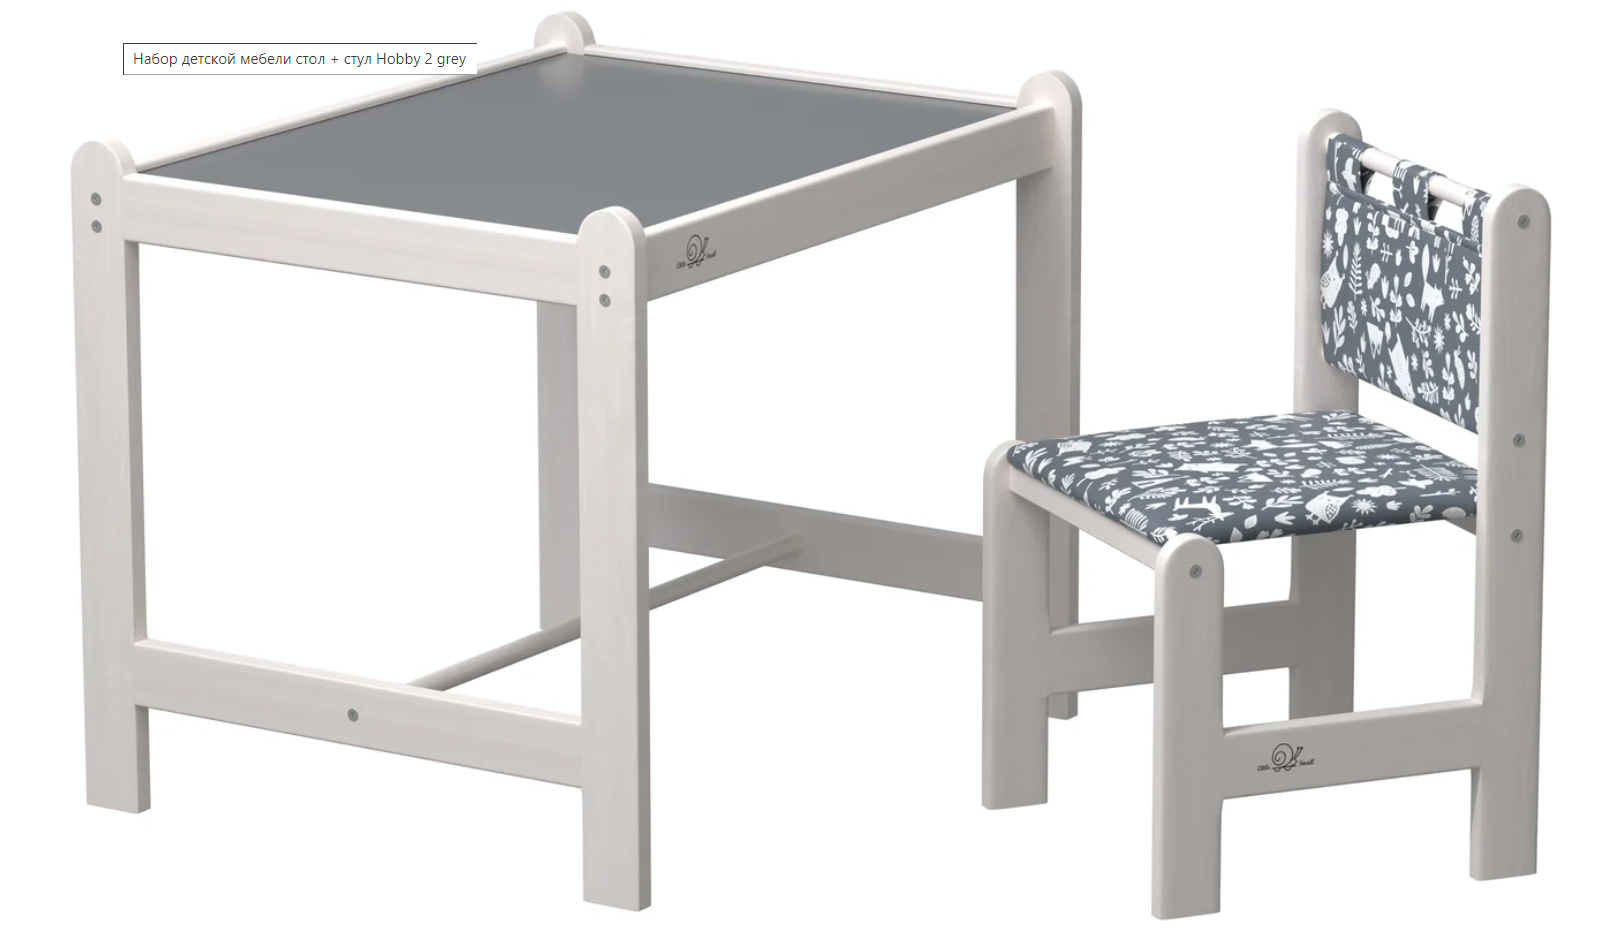 Набор детской мебели Hobby-2 (стол+стул) серый